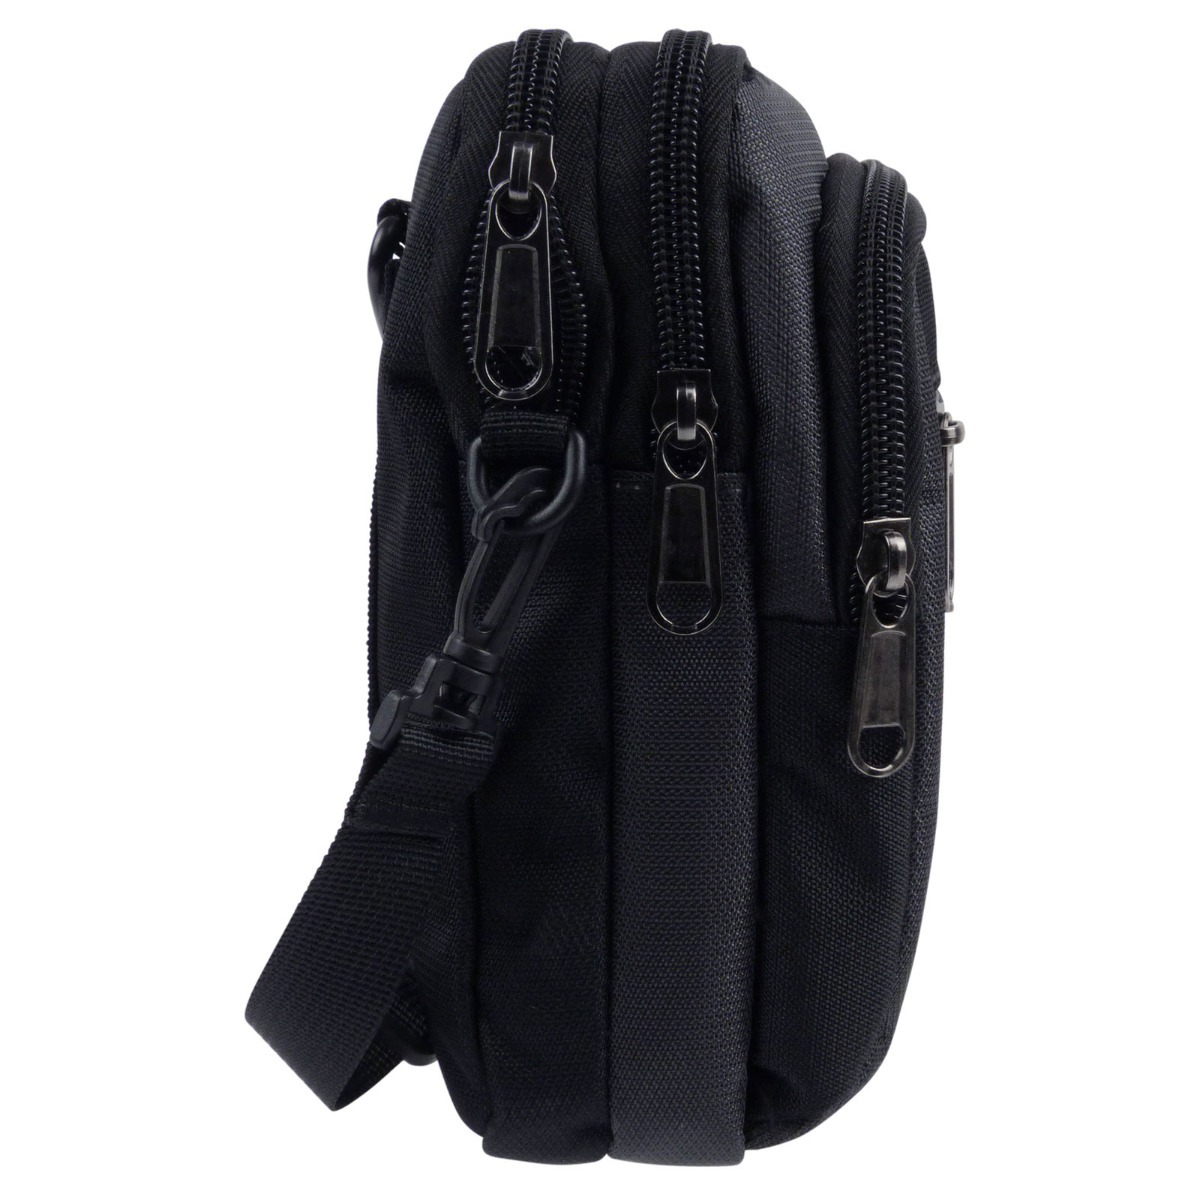 Metro Unisex Mini Shoulder/Travel Utility Cross Body Bag | eBay